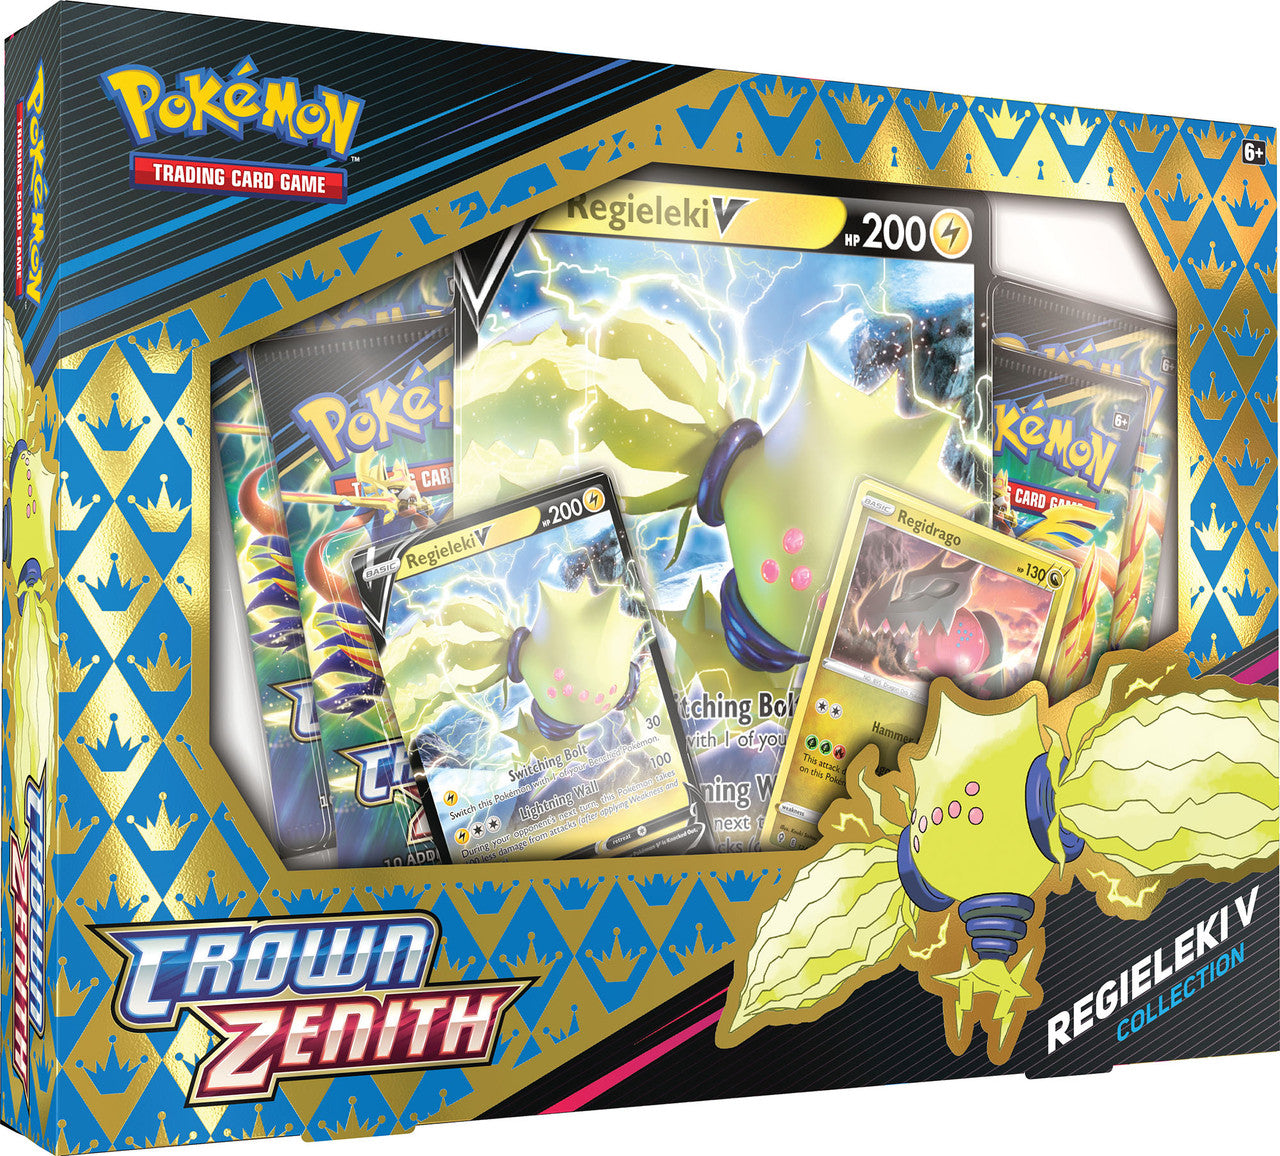 Pokemon Crown Zenith Regidrago / Regieleki V Box